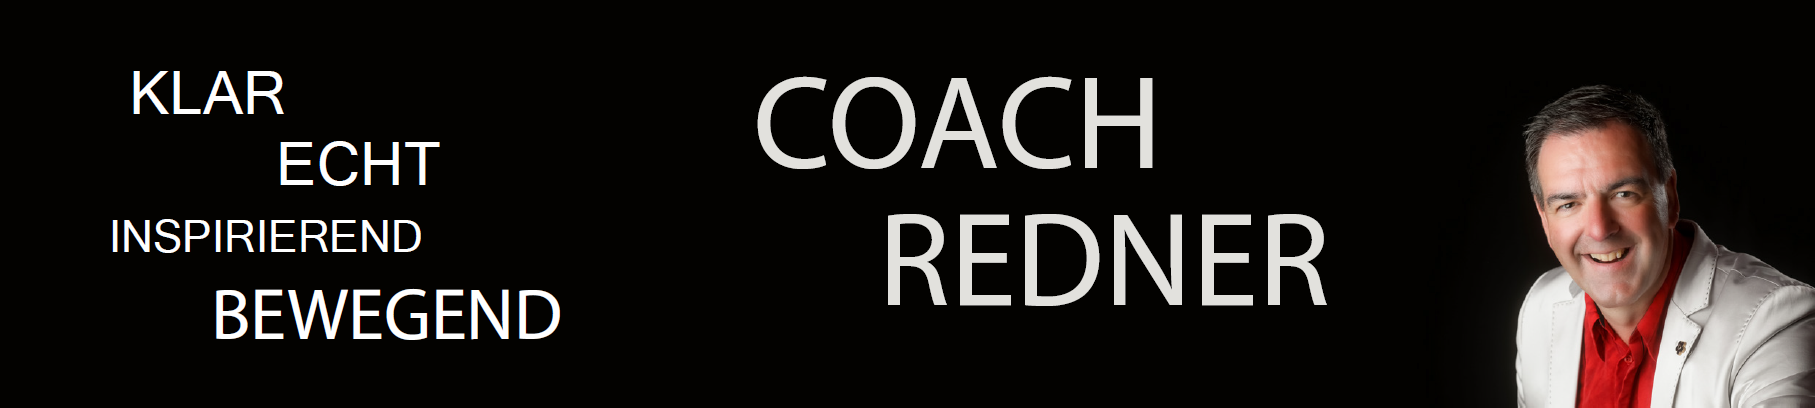 Klar Echt Inspirierend Bewegend Coach Redner